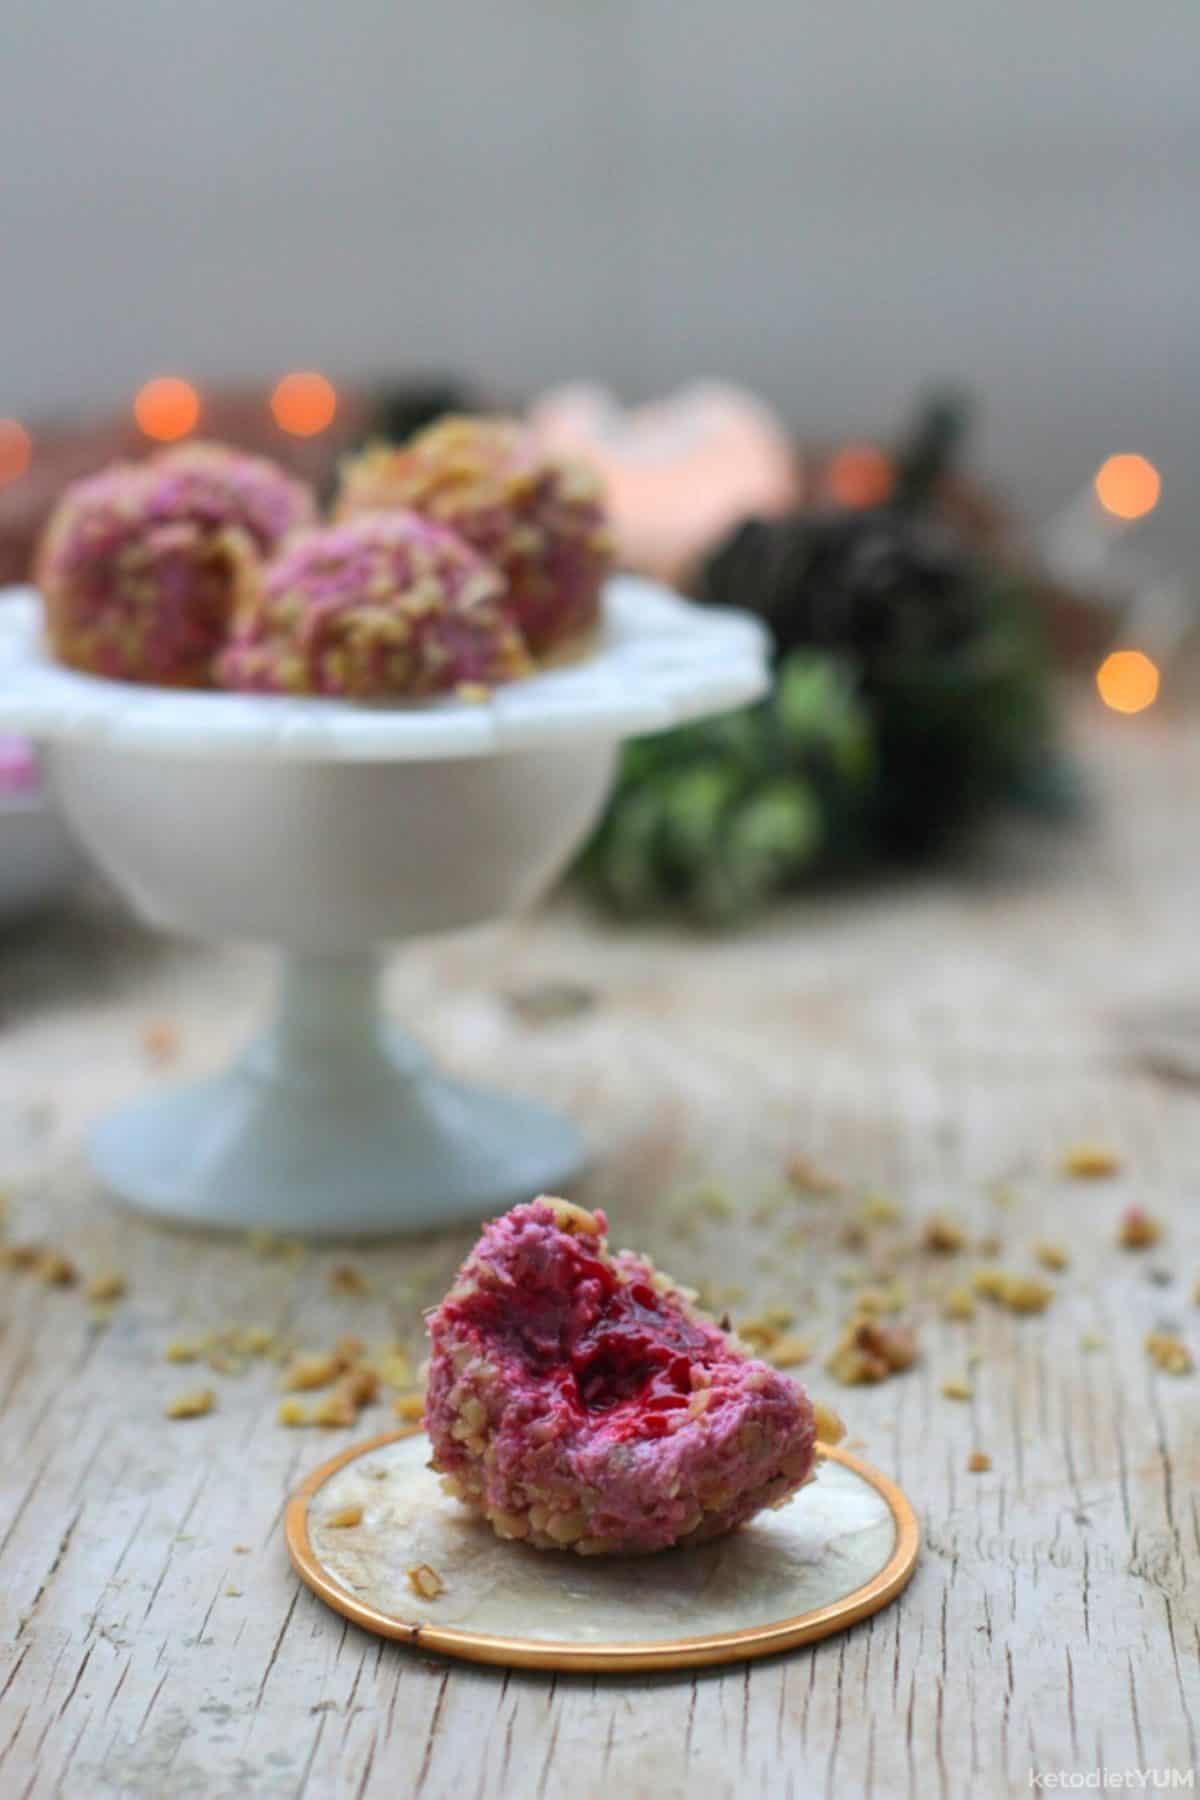 A raspberry cheesecake bite with a crunchy walnut outside and fresh raspberry inside